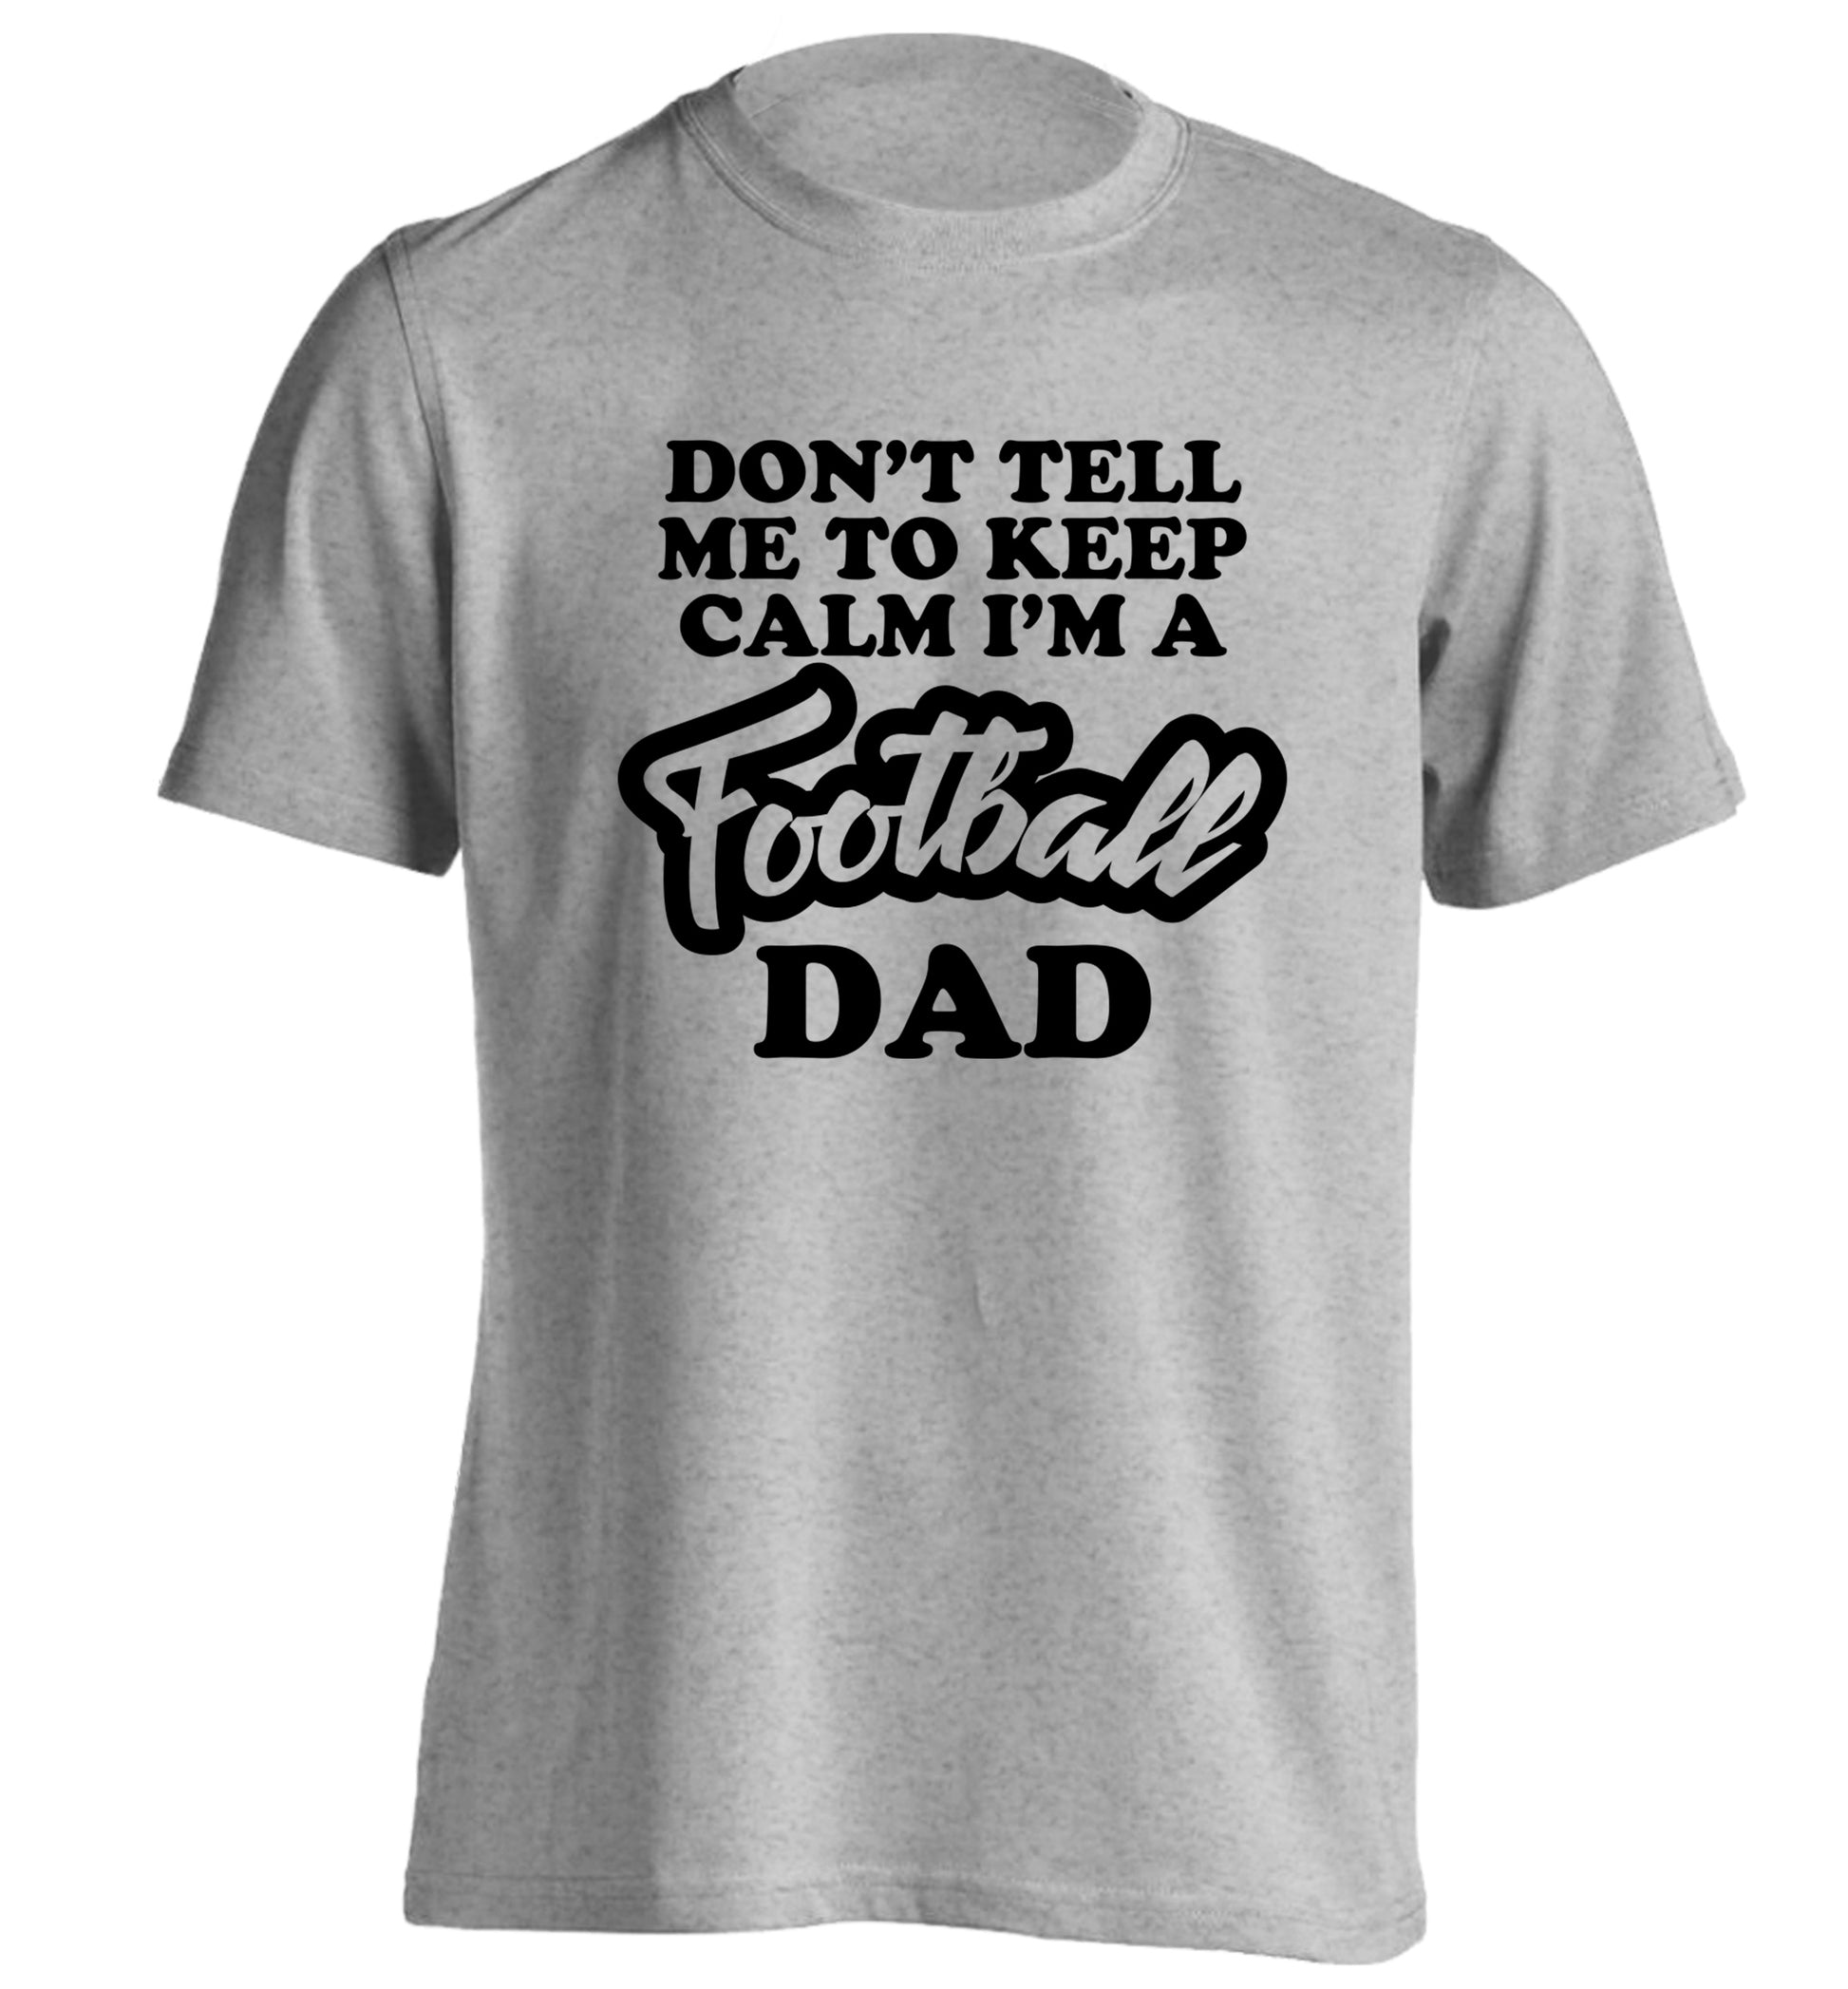 Don't tell me to keep calm I'm a football dad adults unisexgrey Tshirt 2XL